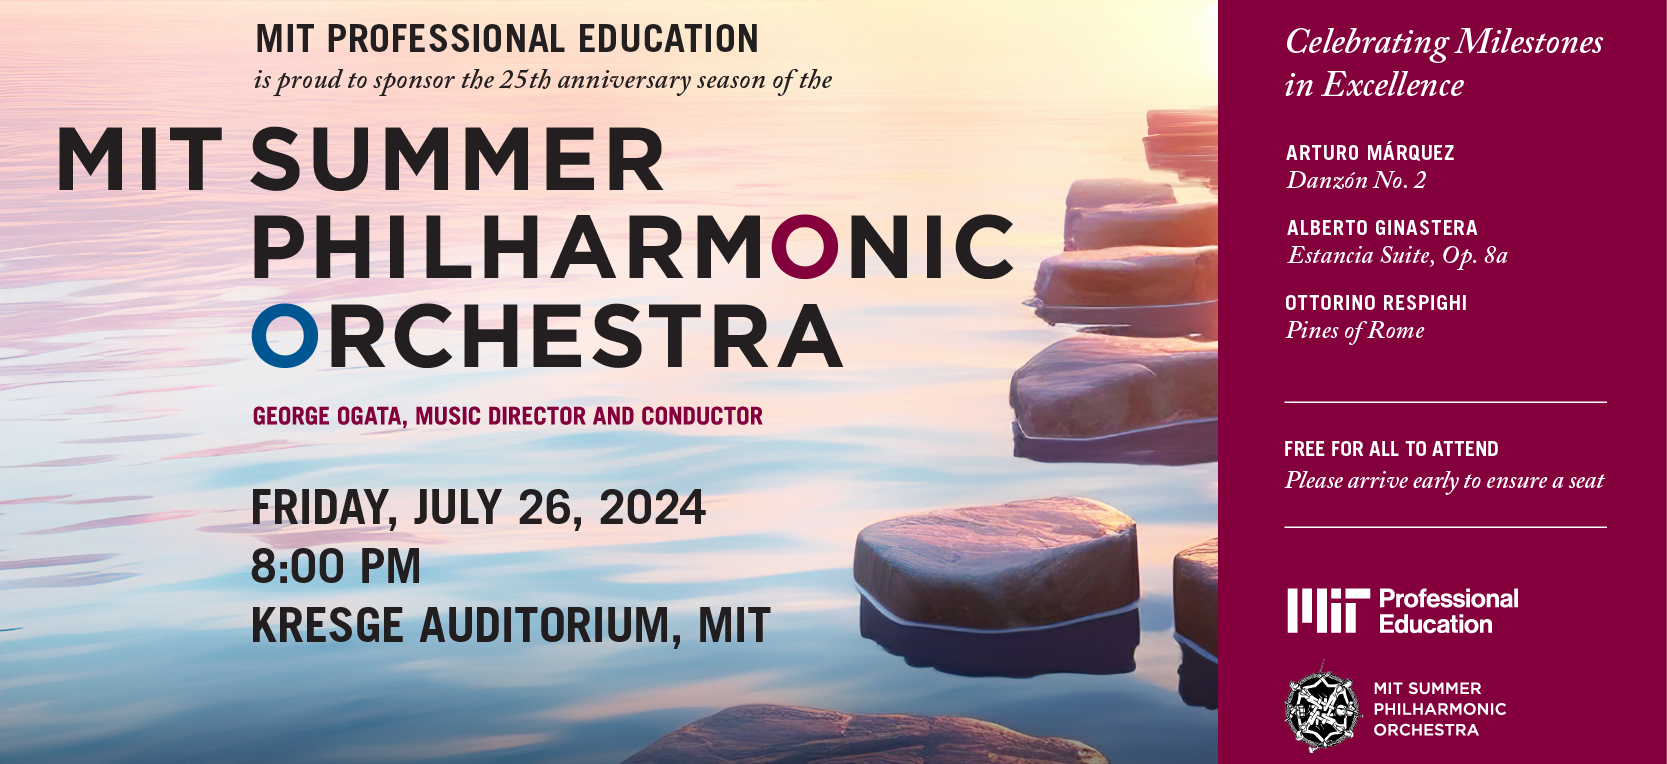 MIT Summer Philharmonic Orchestra (MITSPO)